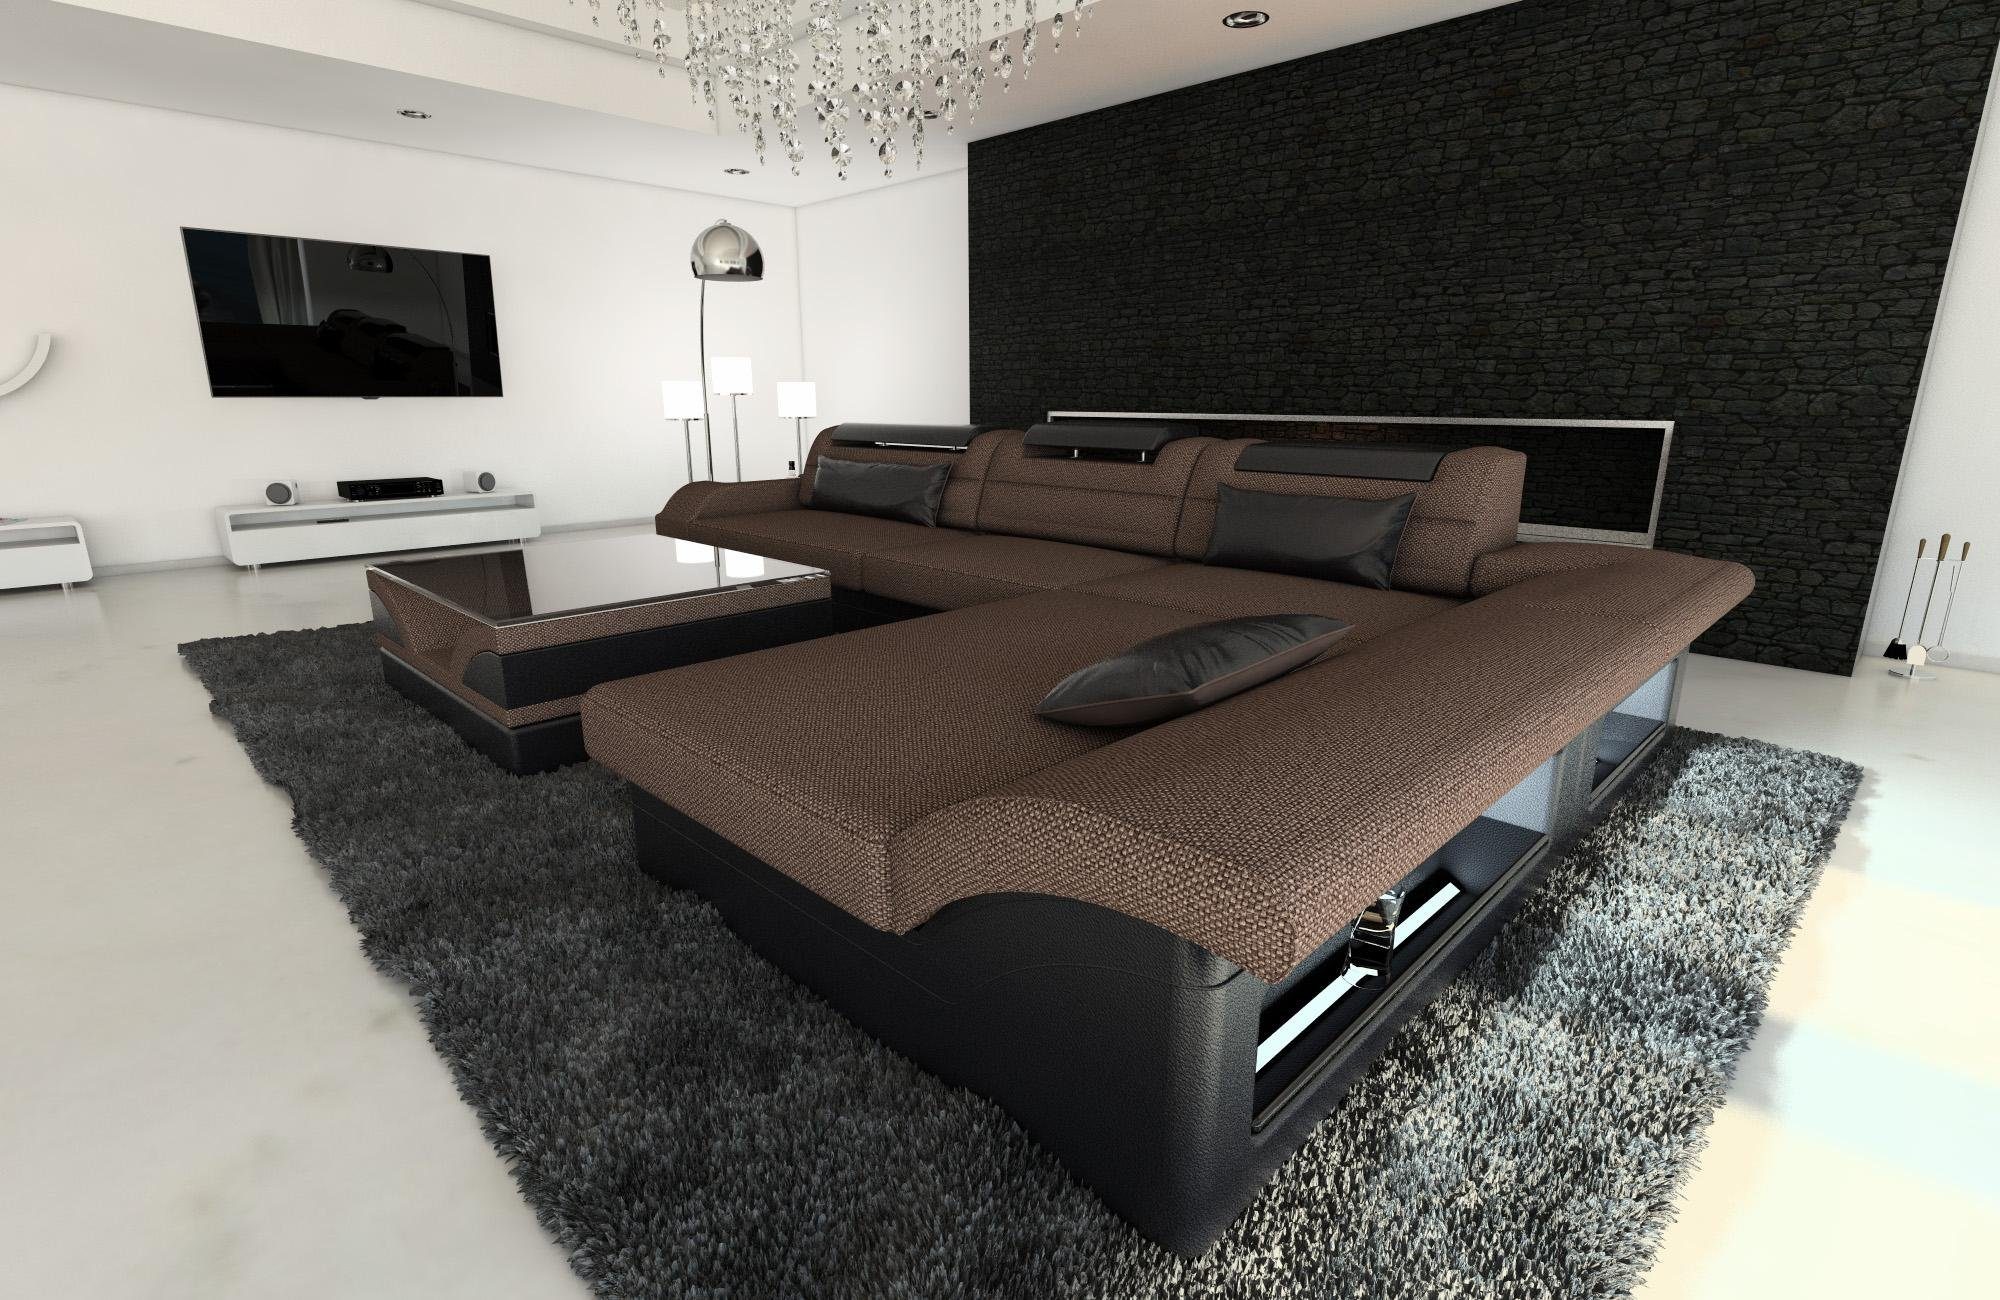 Sofa Dreams Ecksofa Stoffsofa Couch Stoff Polstersofa Monza L Form, mit LED, ausziehbare Bettfunktion, Designersofa H8 Braun-Schwarz